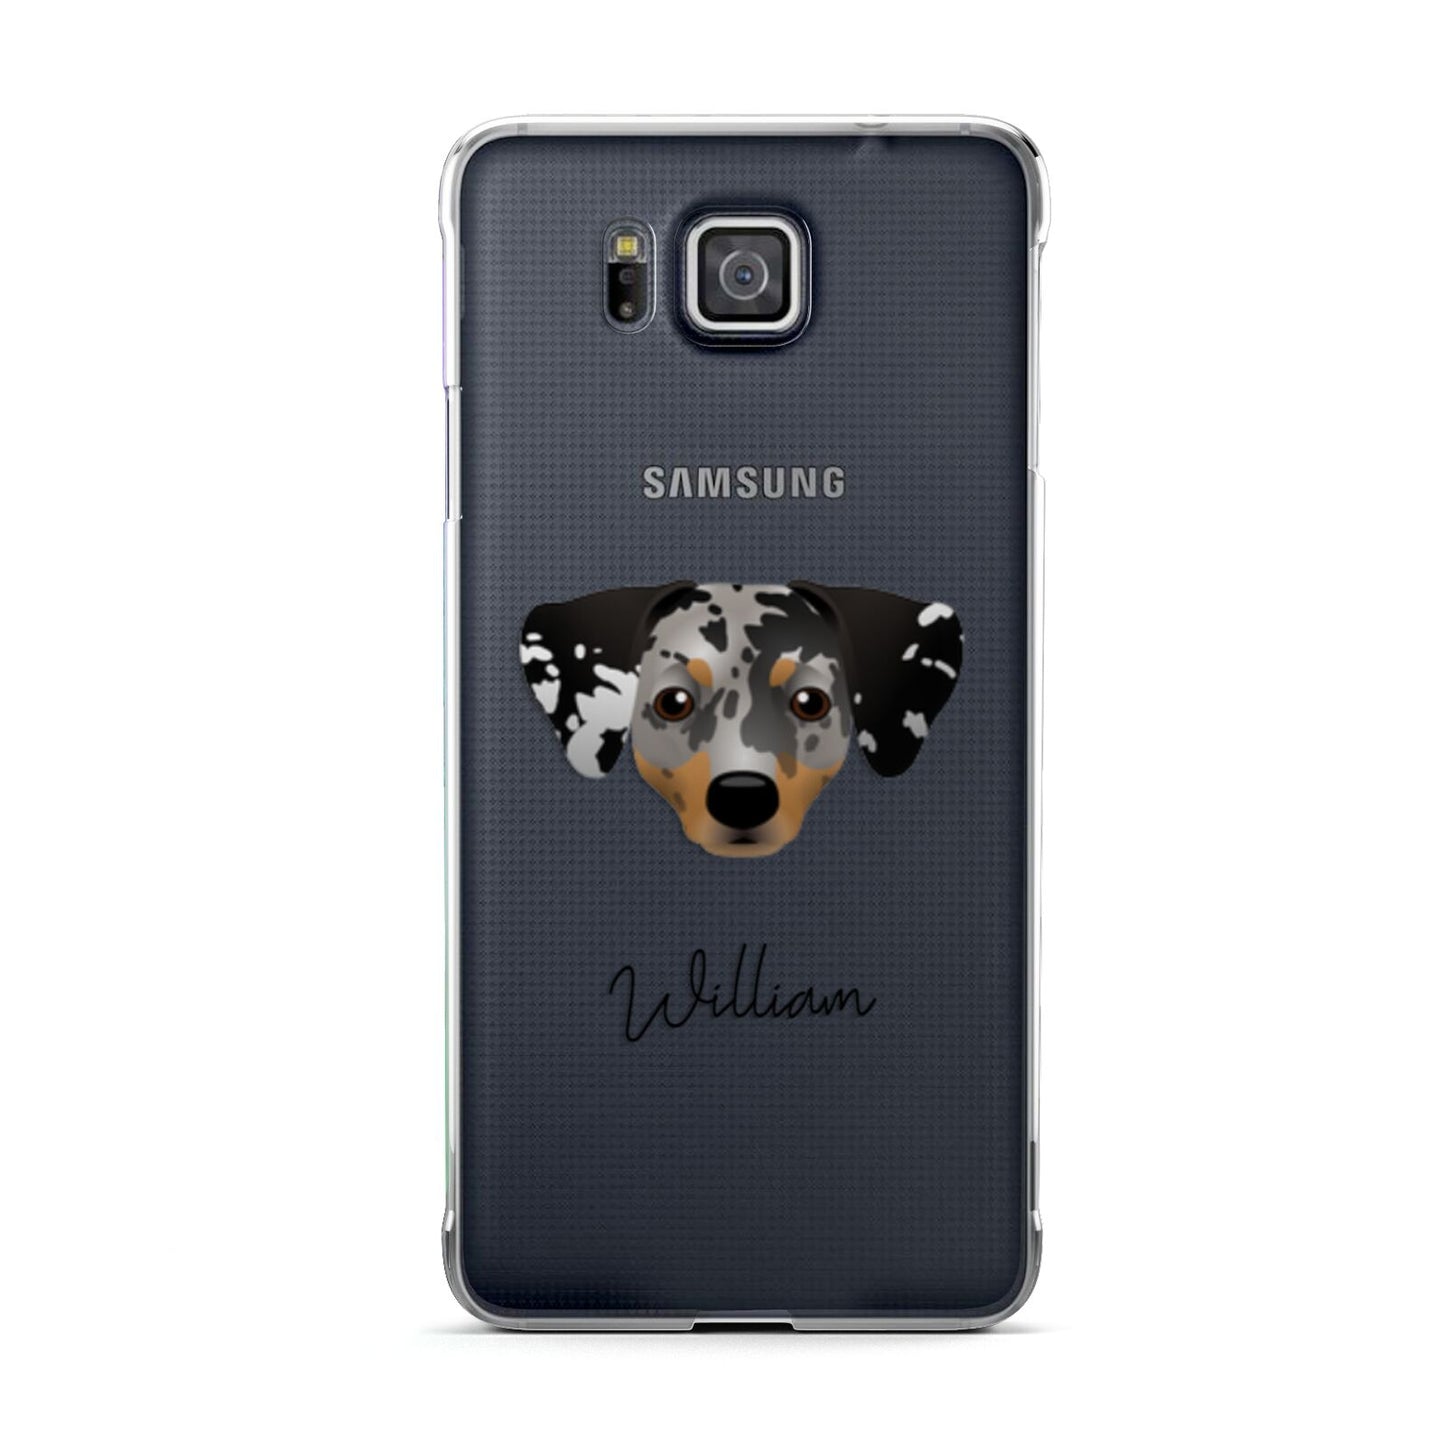 Chiweenie Personalised Samsung Galaxy Alpha Case